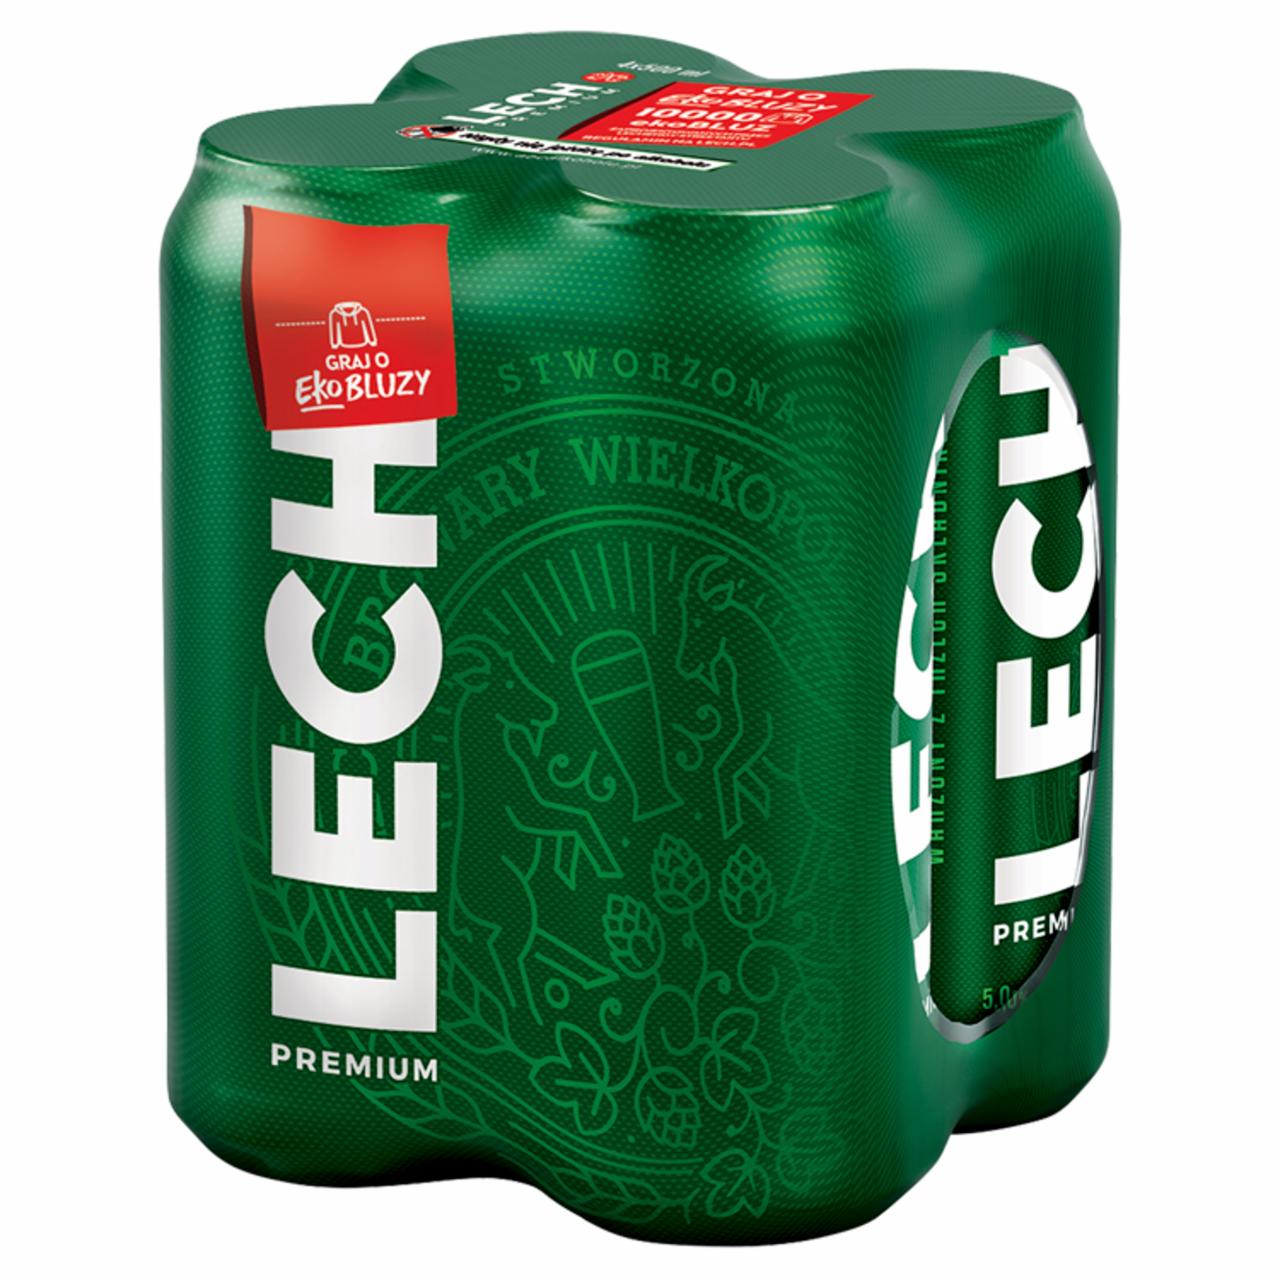 Zdjęcia - Lech Premium Piwo jasne 4 x 500 ml